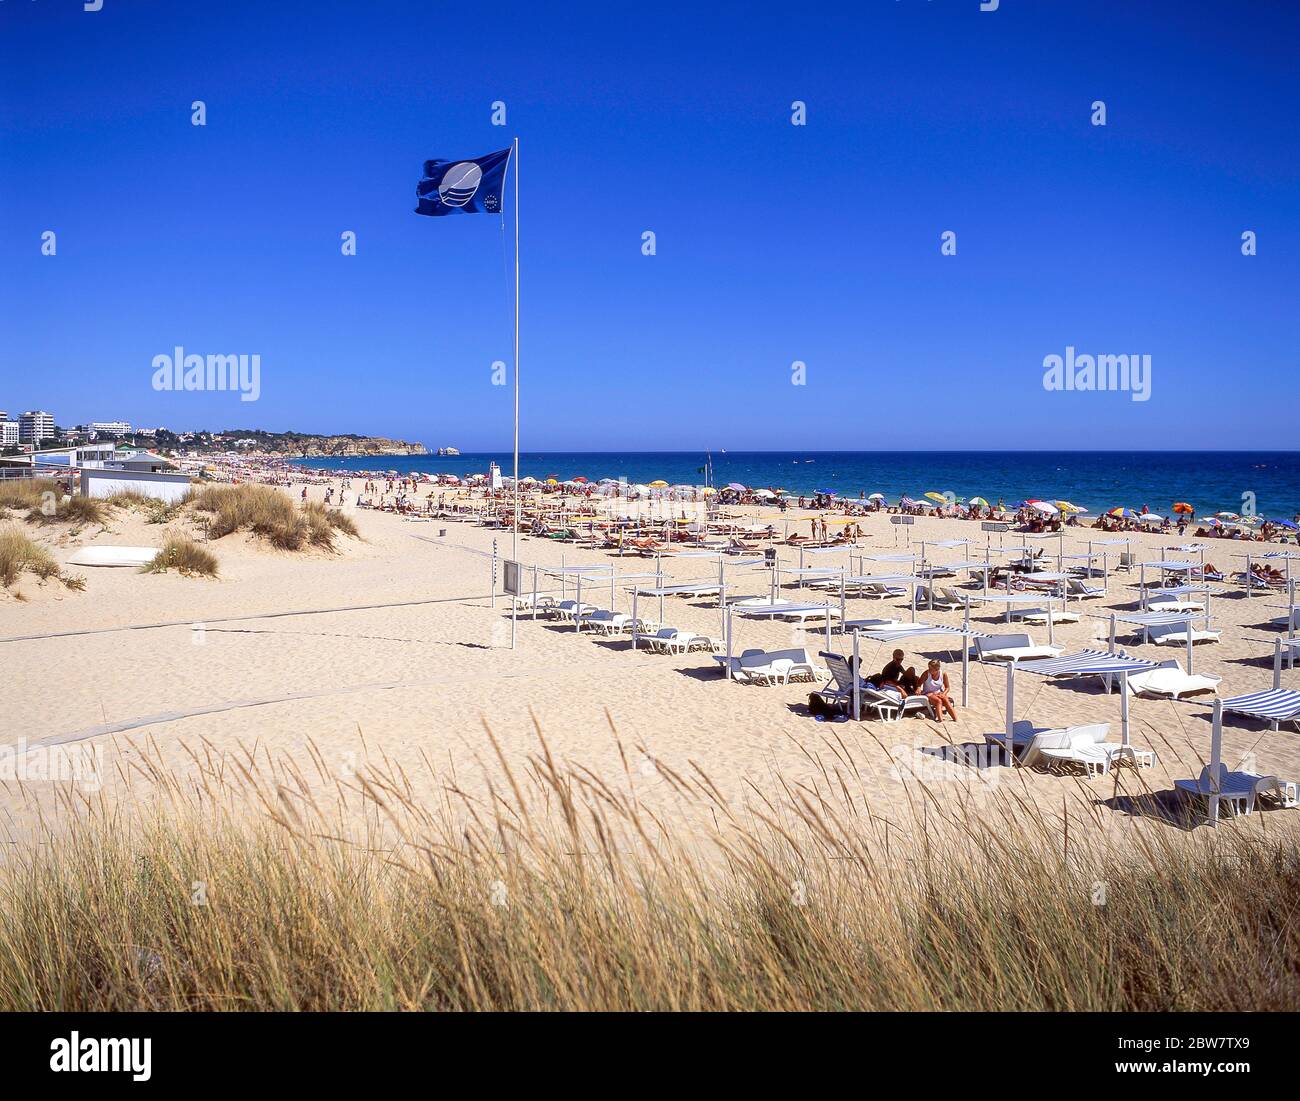 Beachscene, Praia da Rocha, Portimão, Algarve Region, Portugal Stock Photo